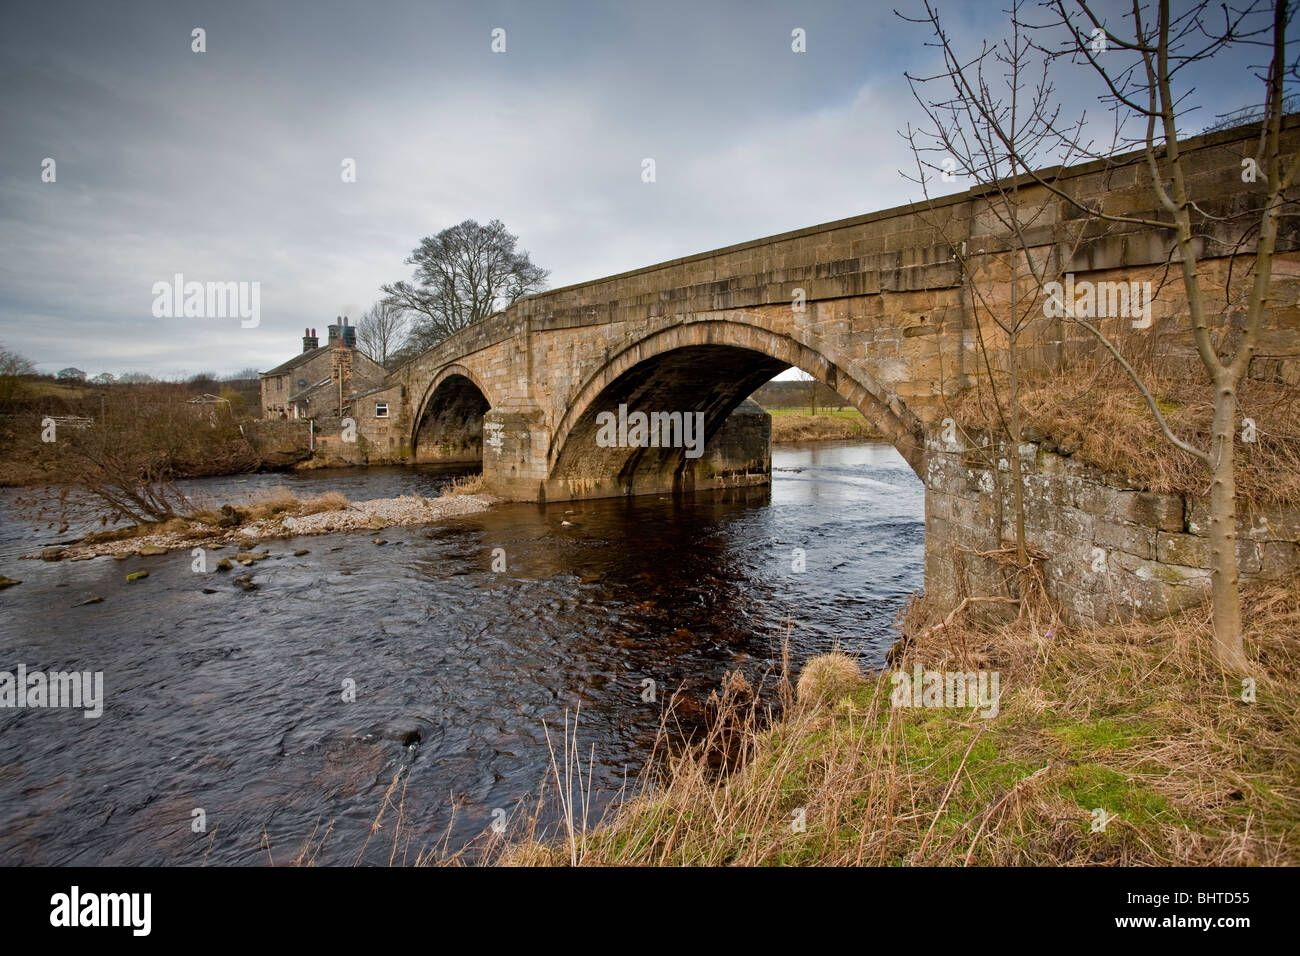 The old stone road bridge at Bolton Abbey Stock Photo